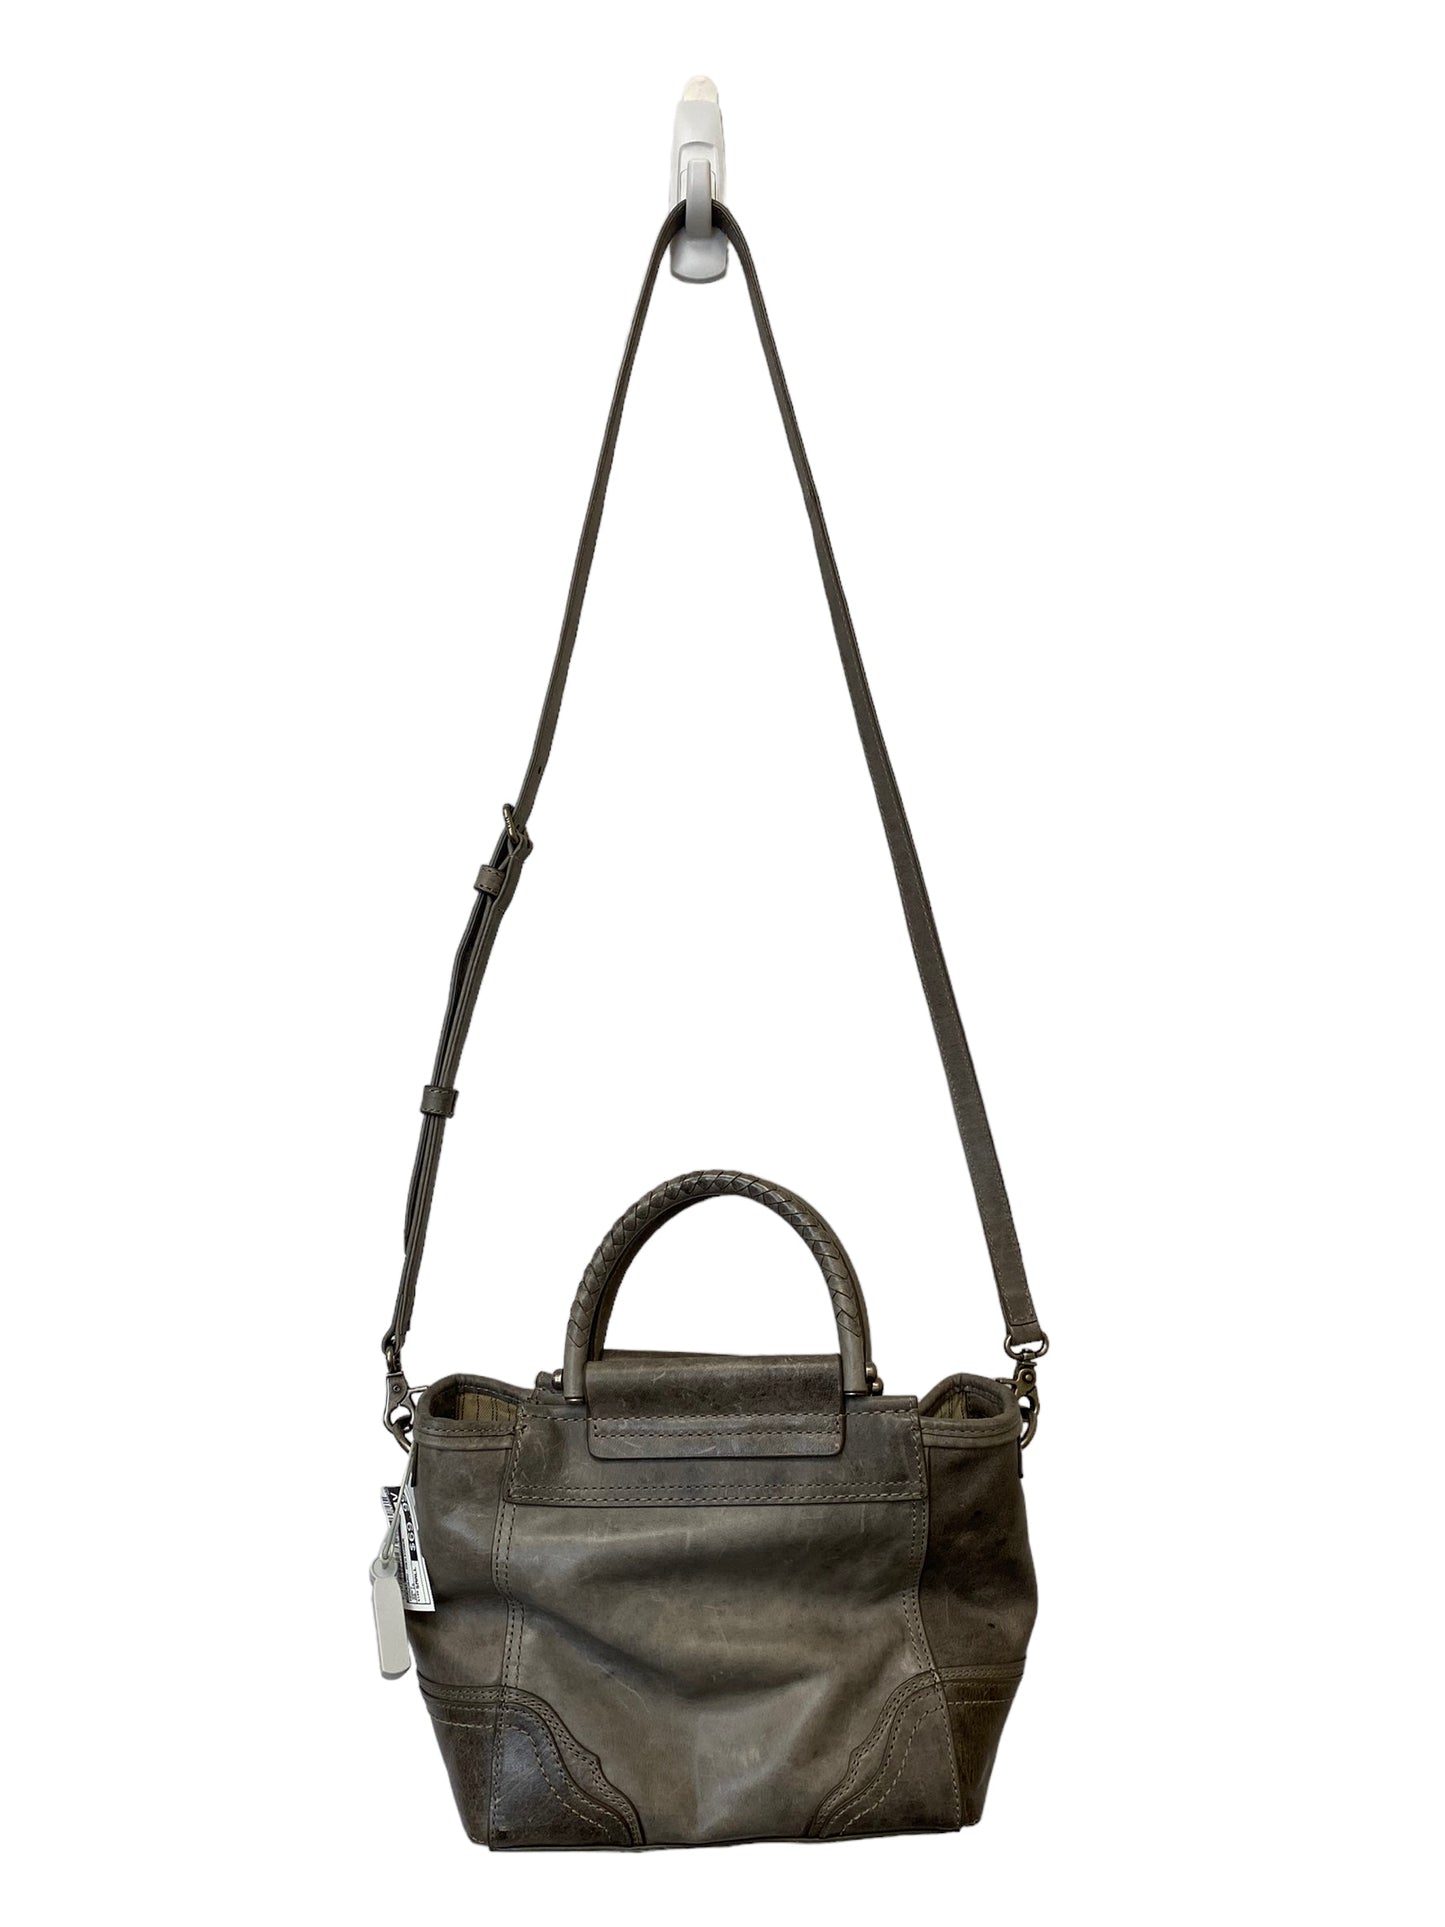 Handbag Designer By Frye  Size: Small